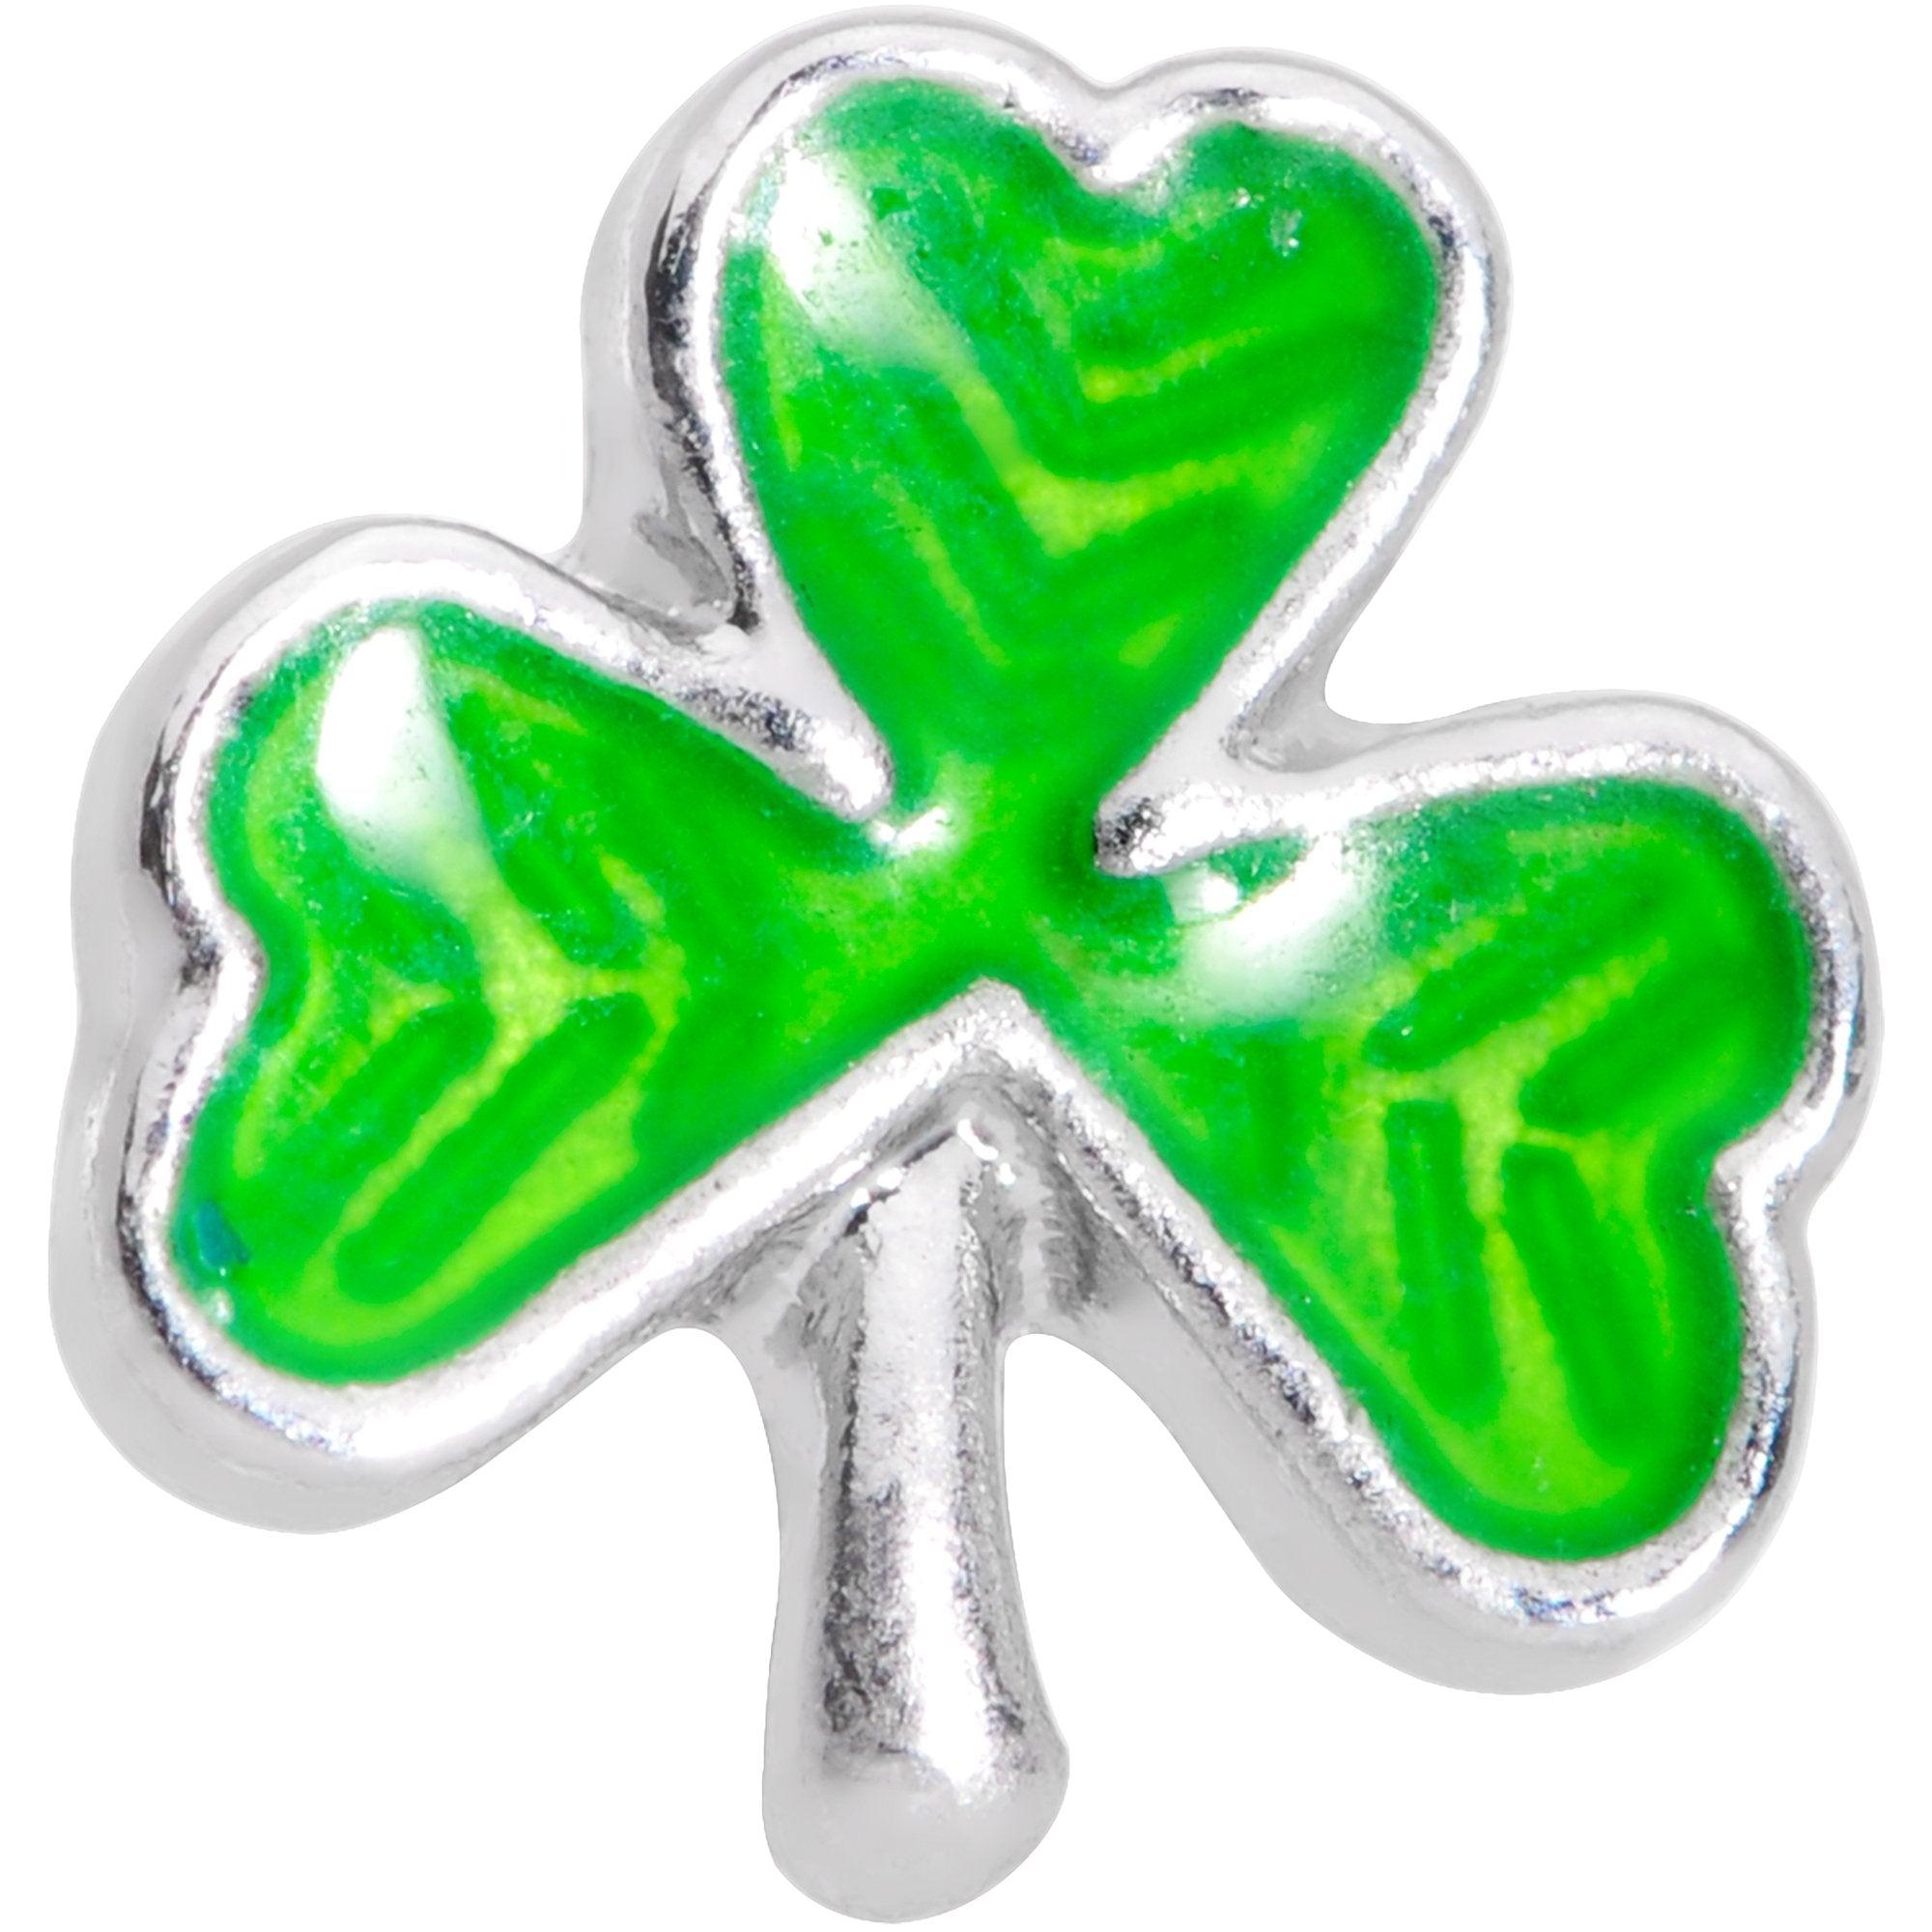 16 Gauge 1/4 Green St Patricks Day Shamrock Cartilage Tragus Earring